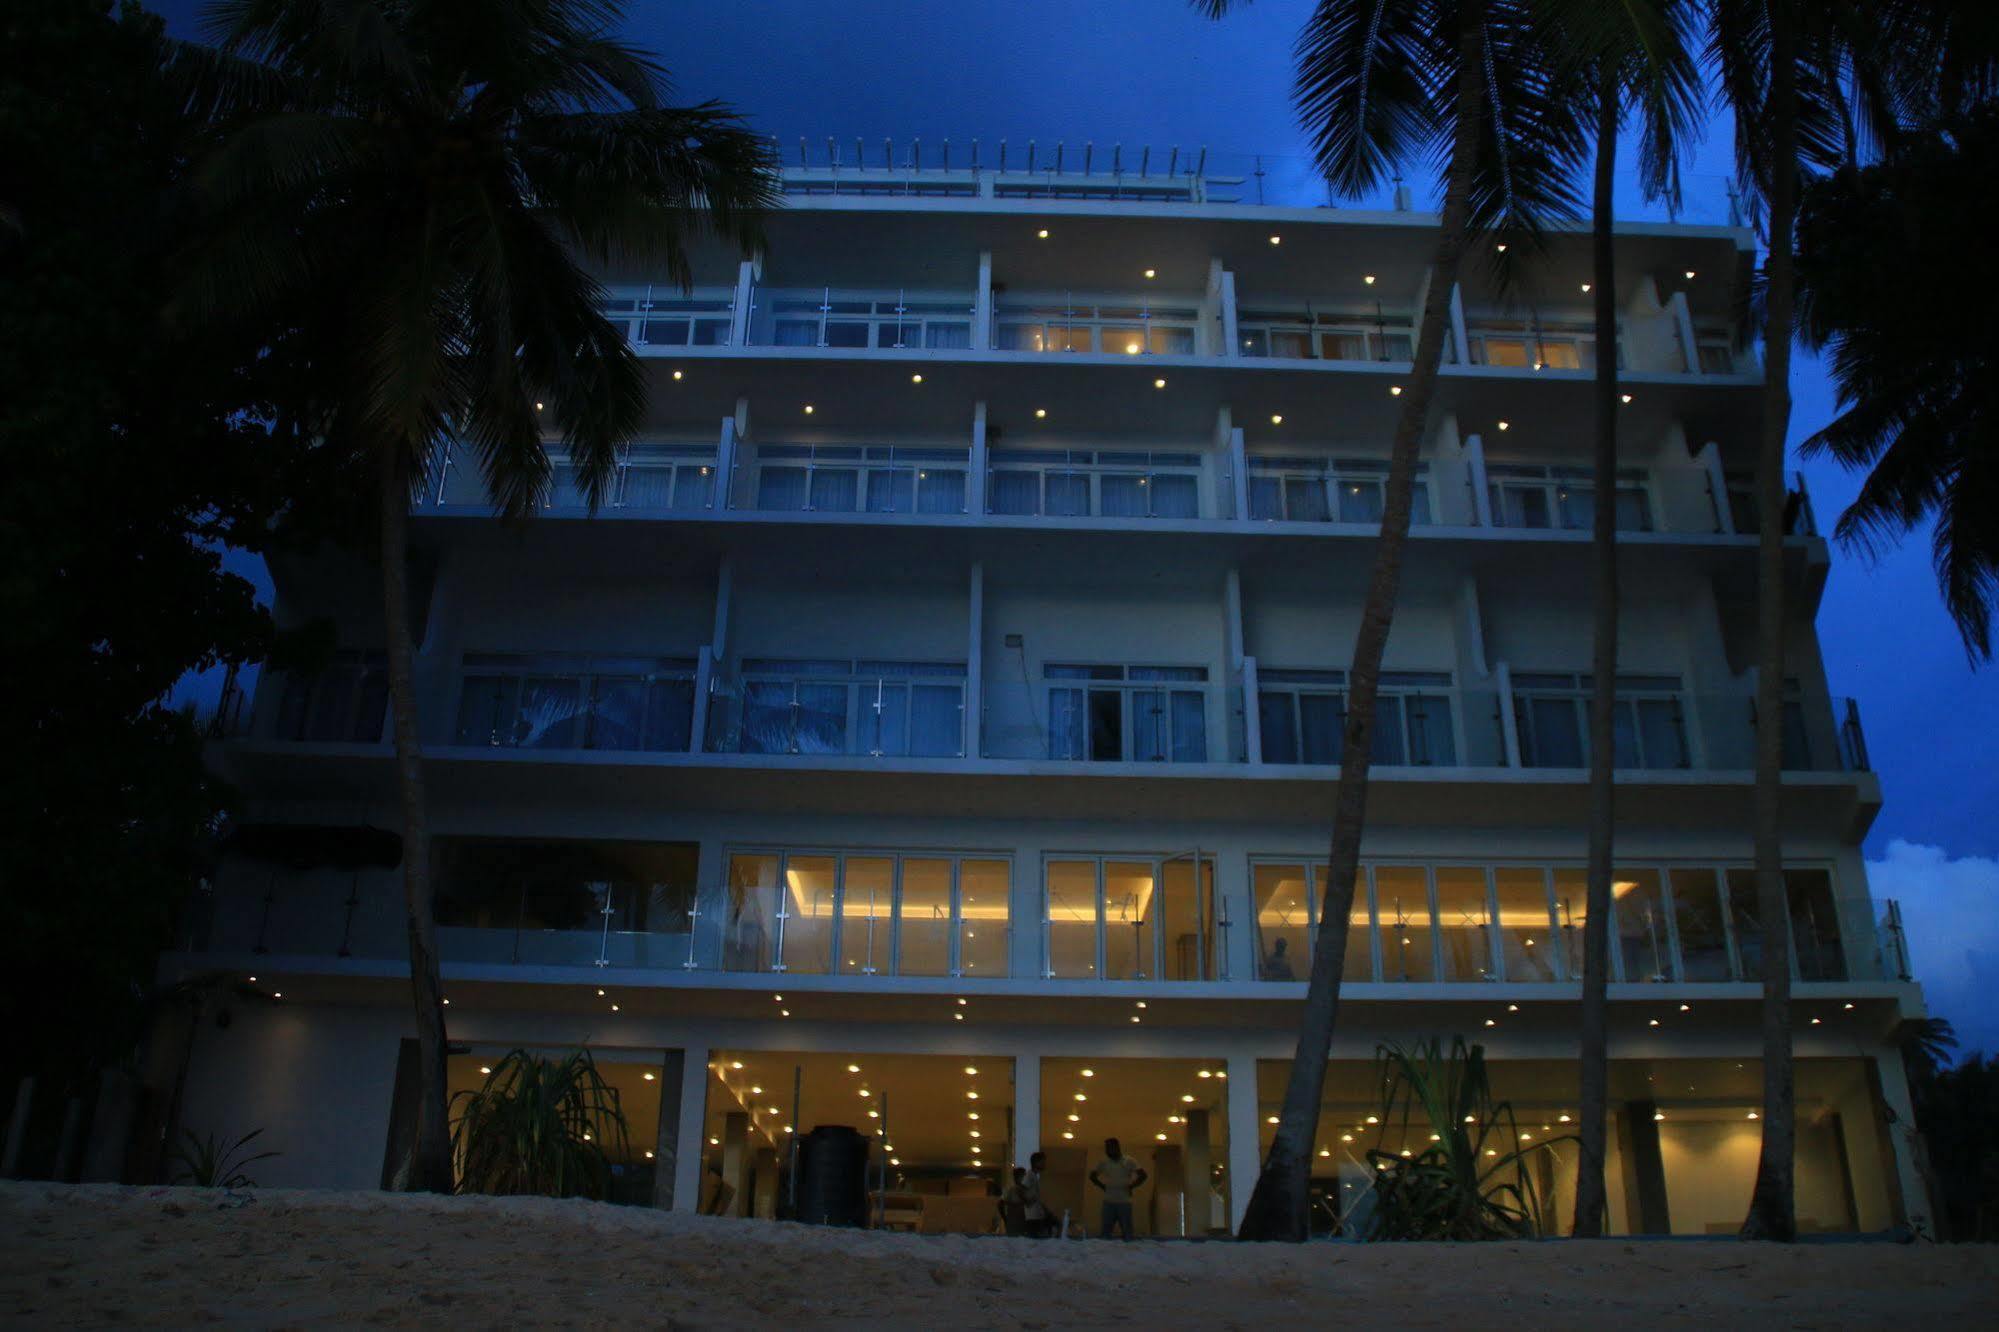 Sayura Beach Hotel Unawatuna Buitenkant foto